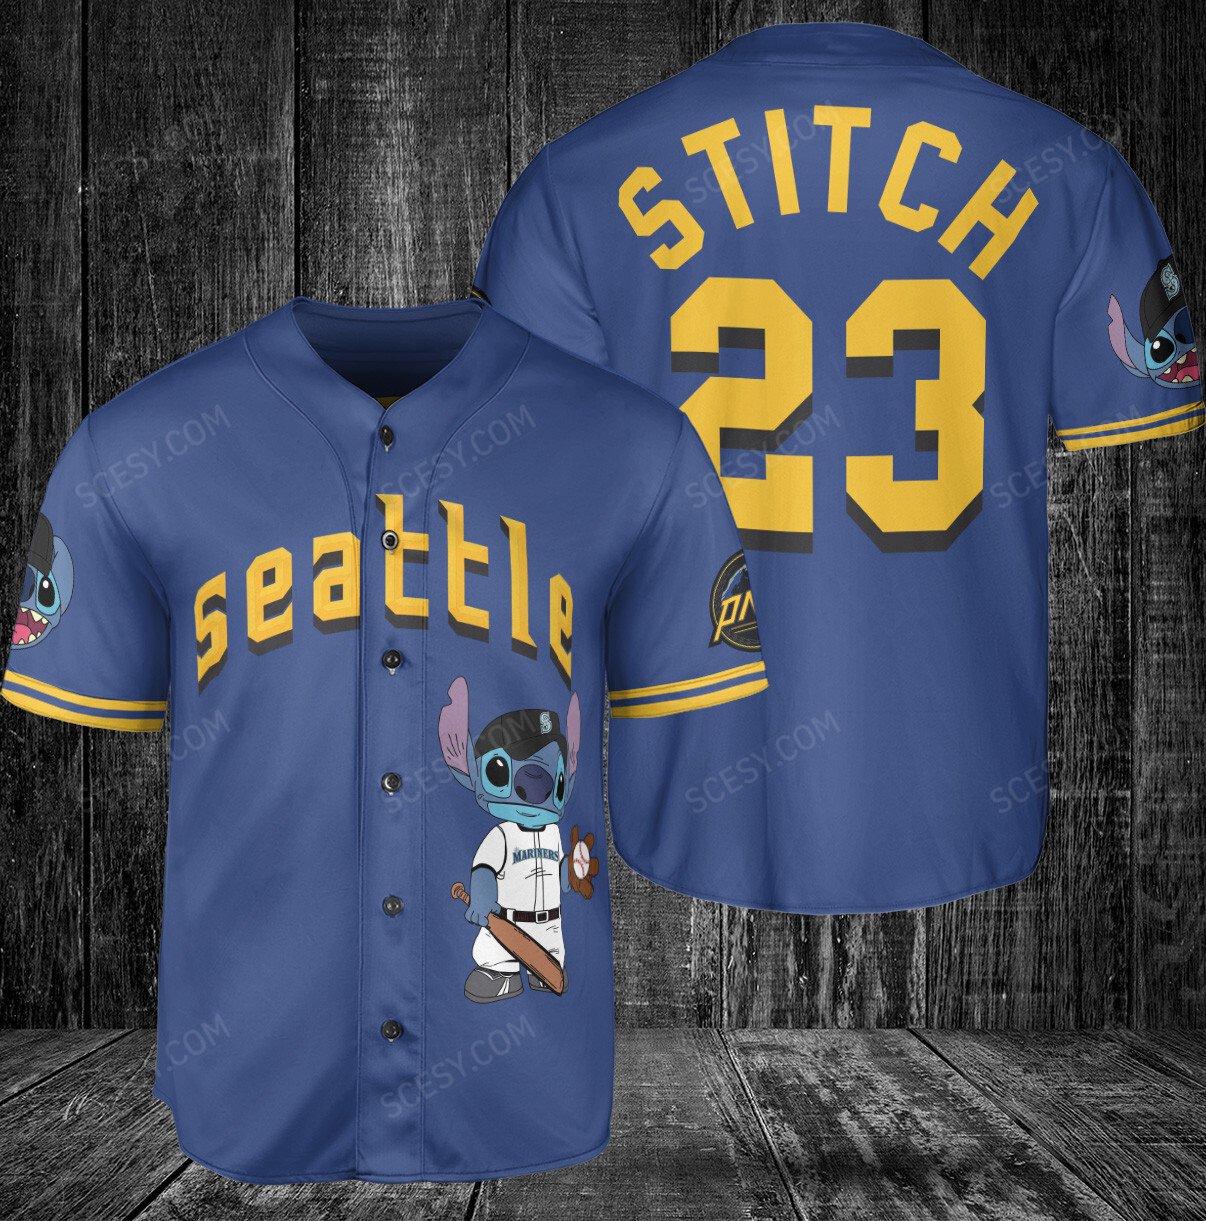 Get Your Seattle Mariners Lilo & Stitch Baseball Jersey - Royal